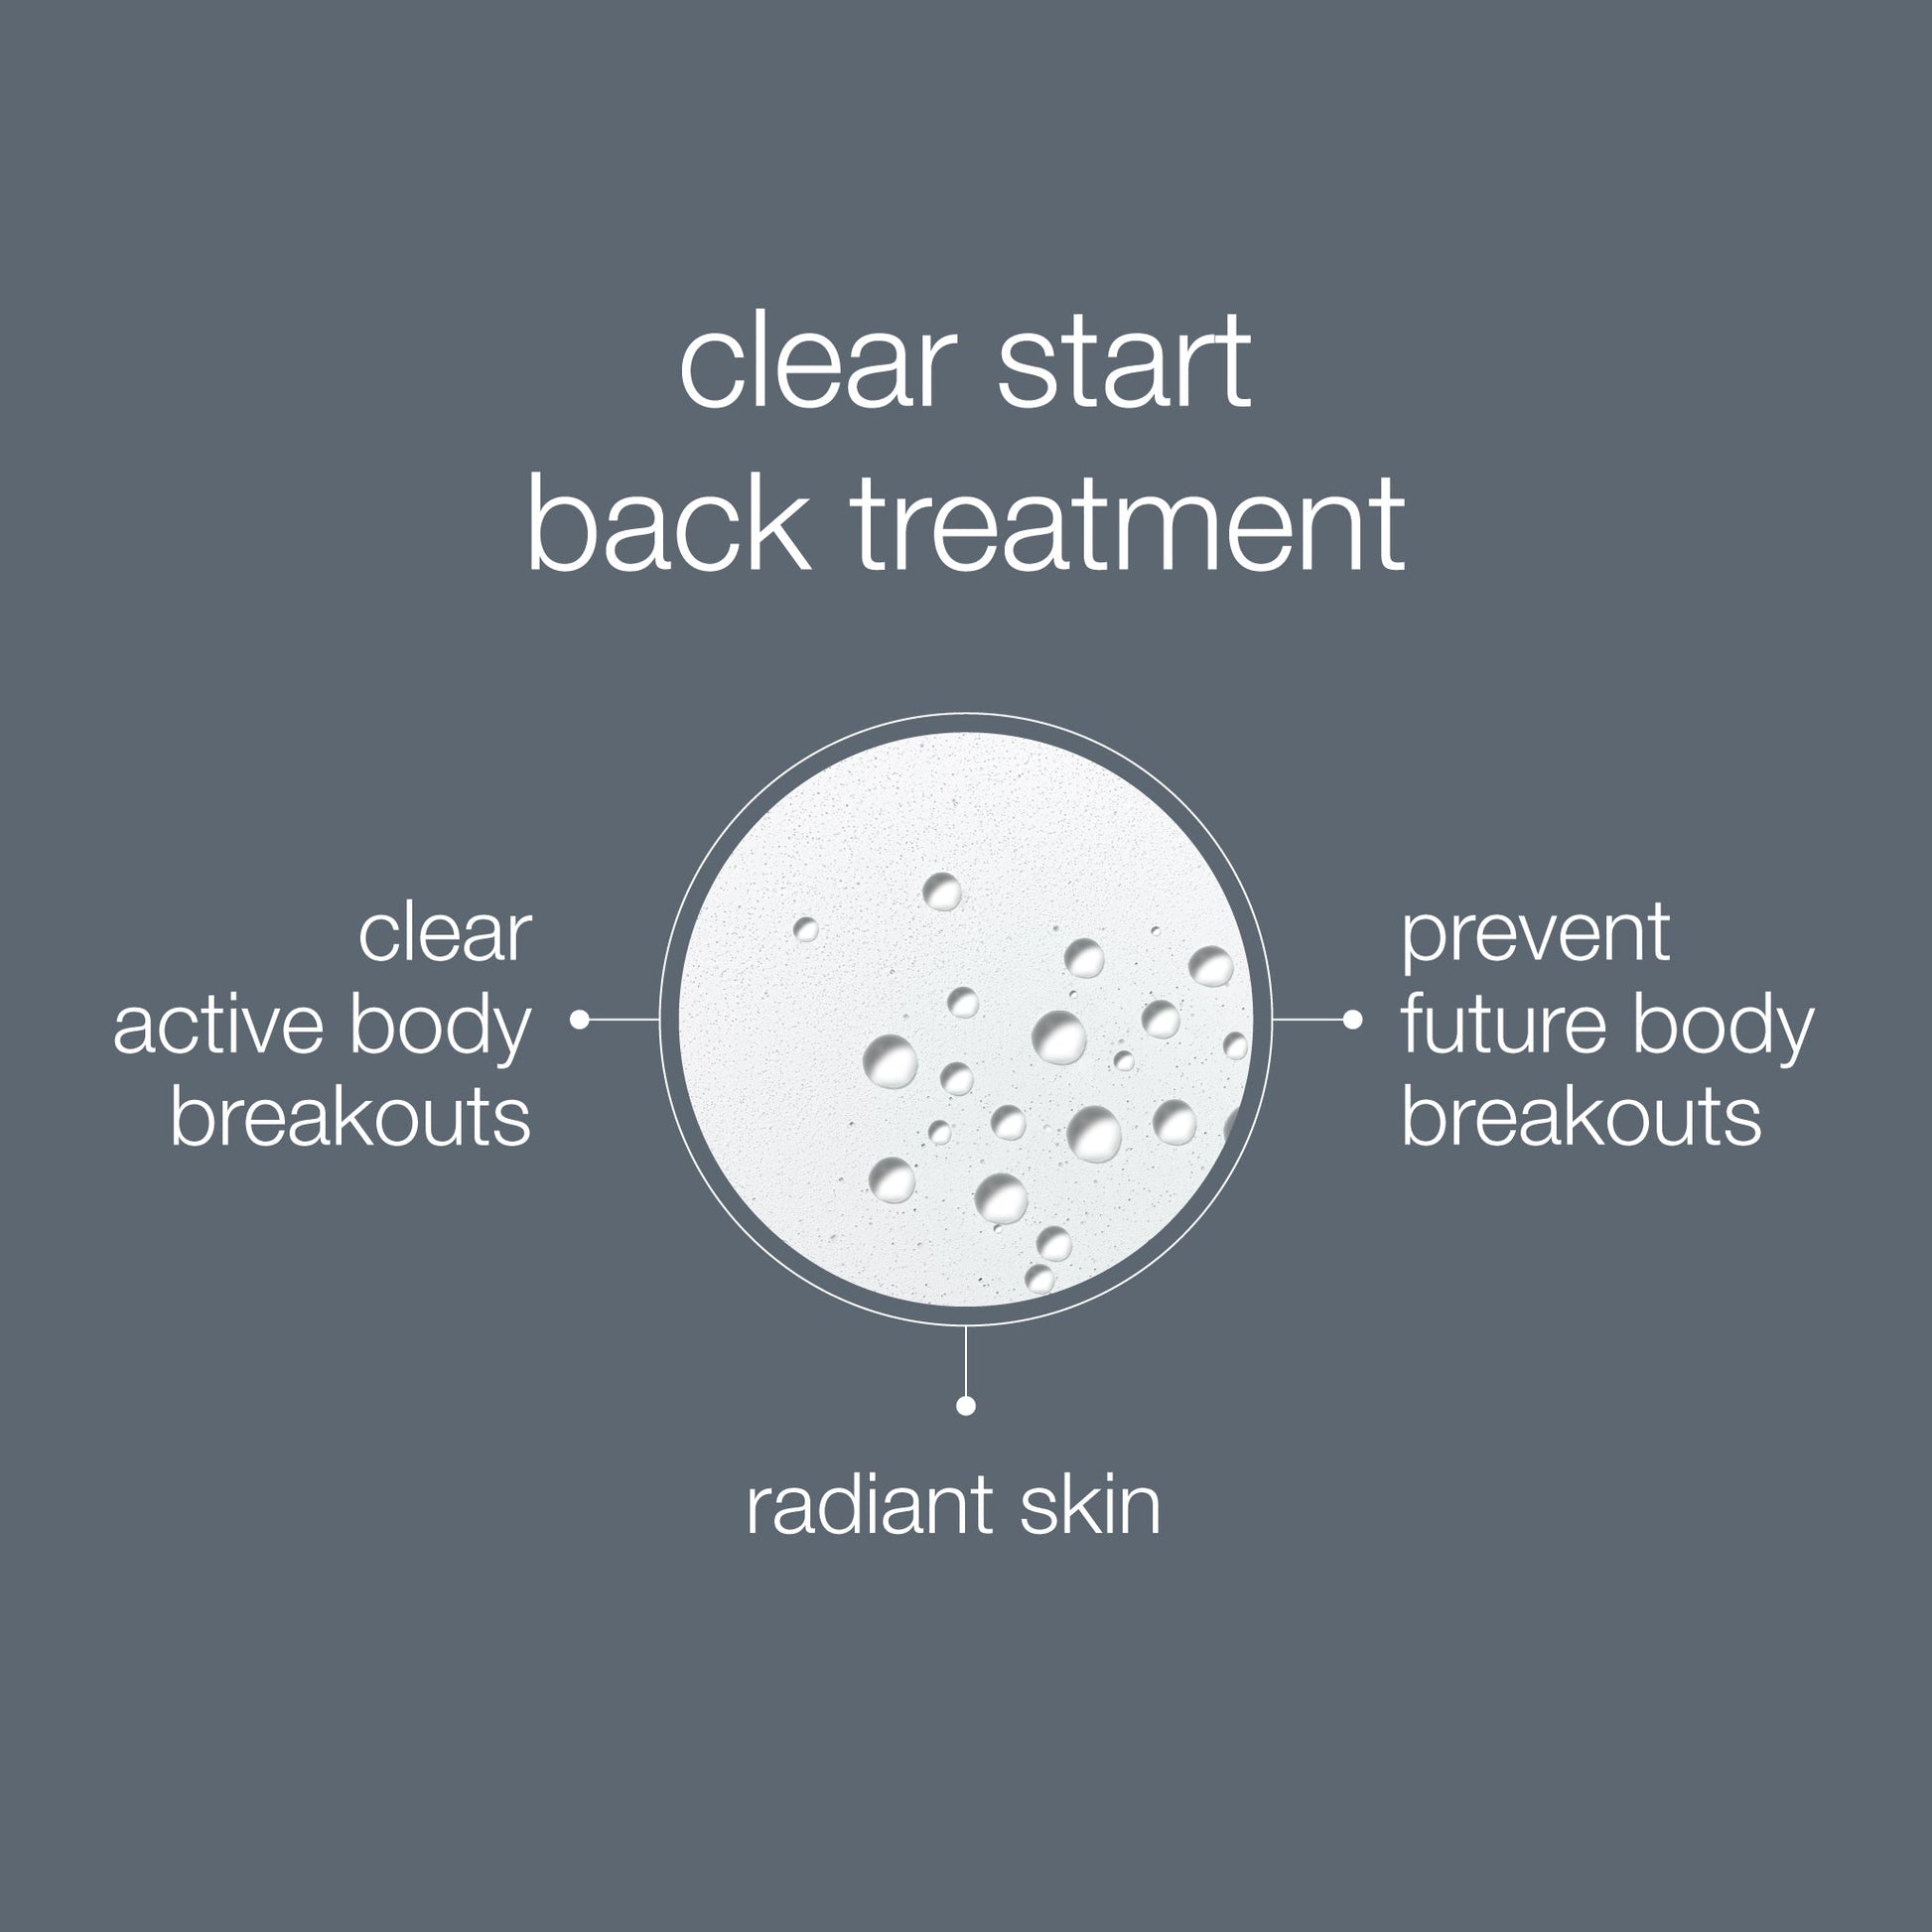 clear start back treatment benefits